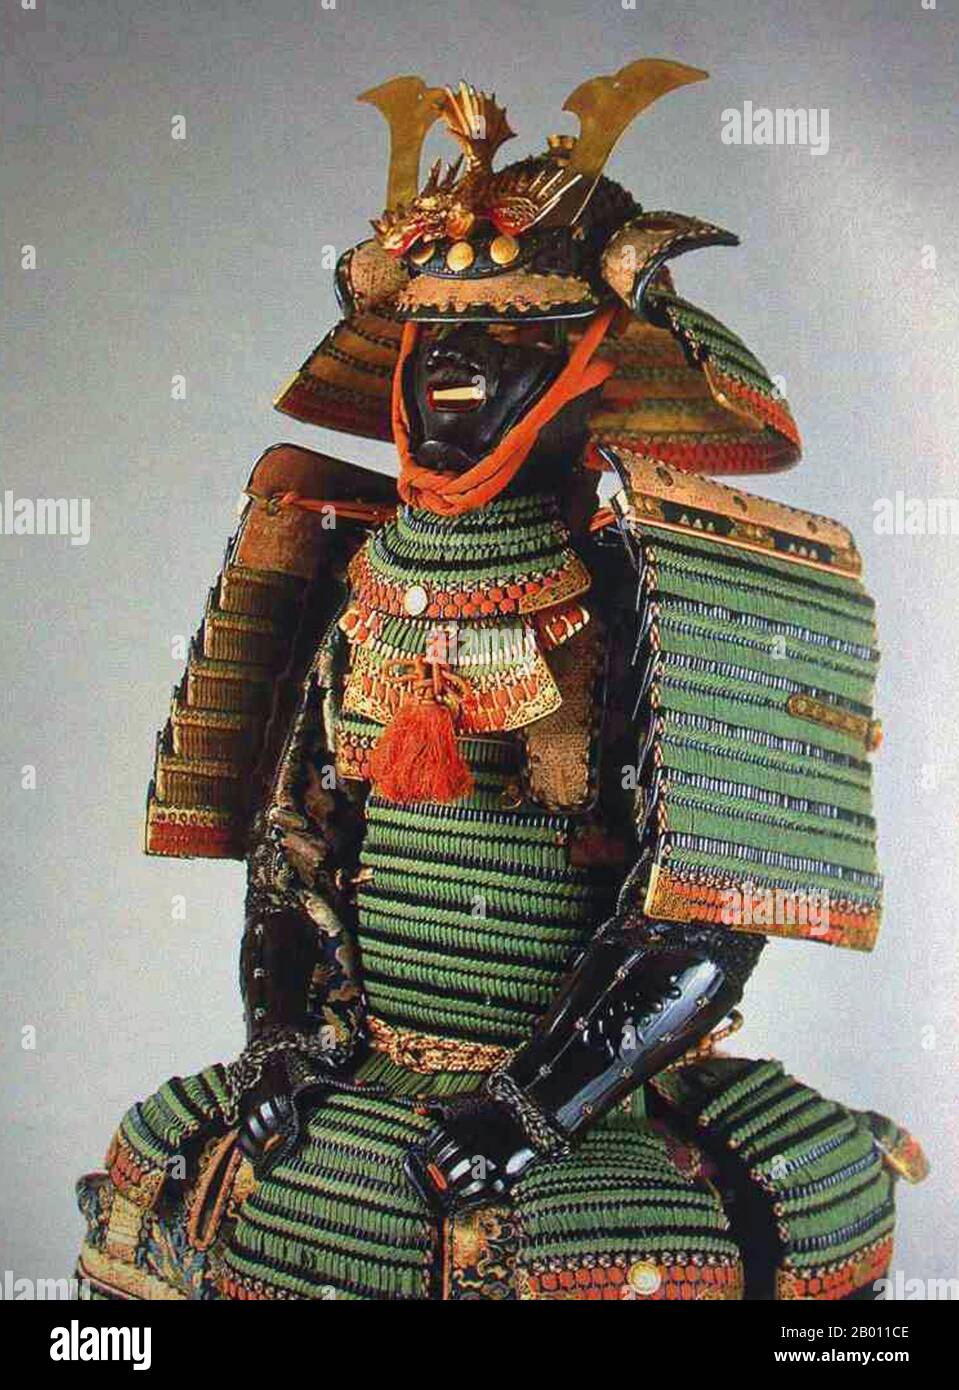 Samurai armor hi-res stock photography and images - Alamy